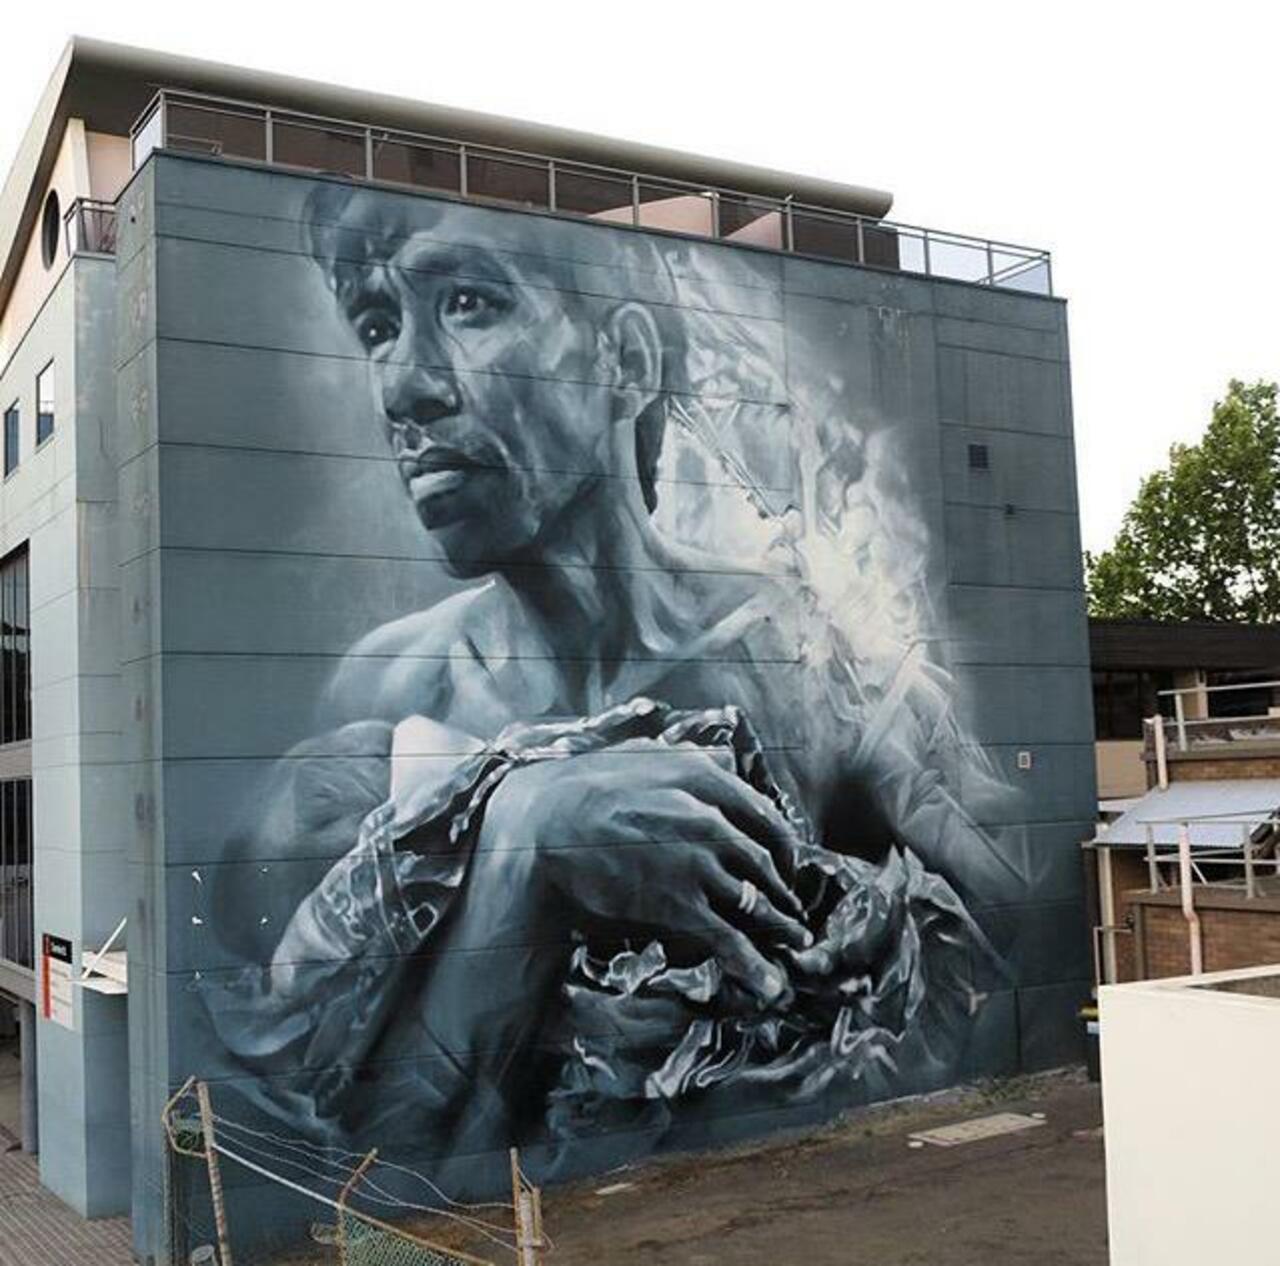 New Street Art by Guido Van Helten in Wollongong Australia 

#art #graffiti #mural #streetart http://t.co/YUamHOxv2Y